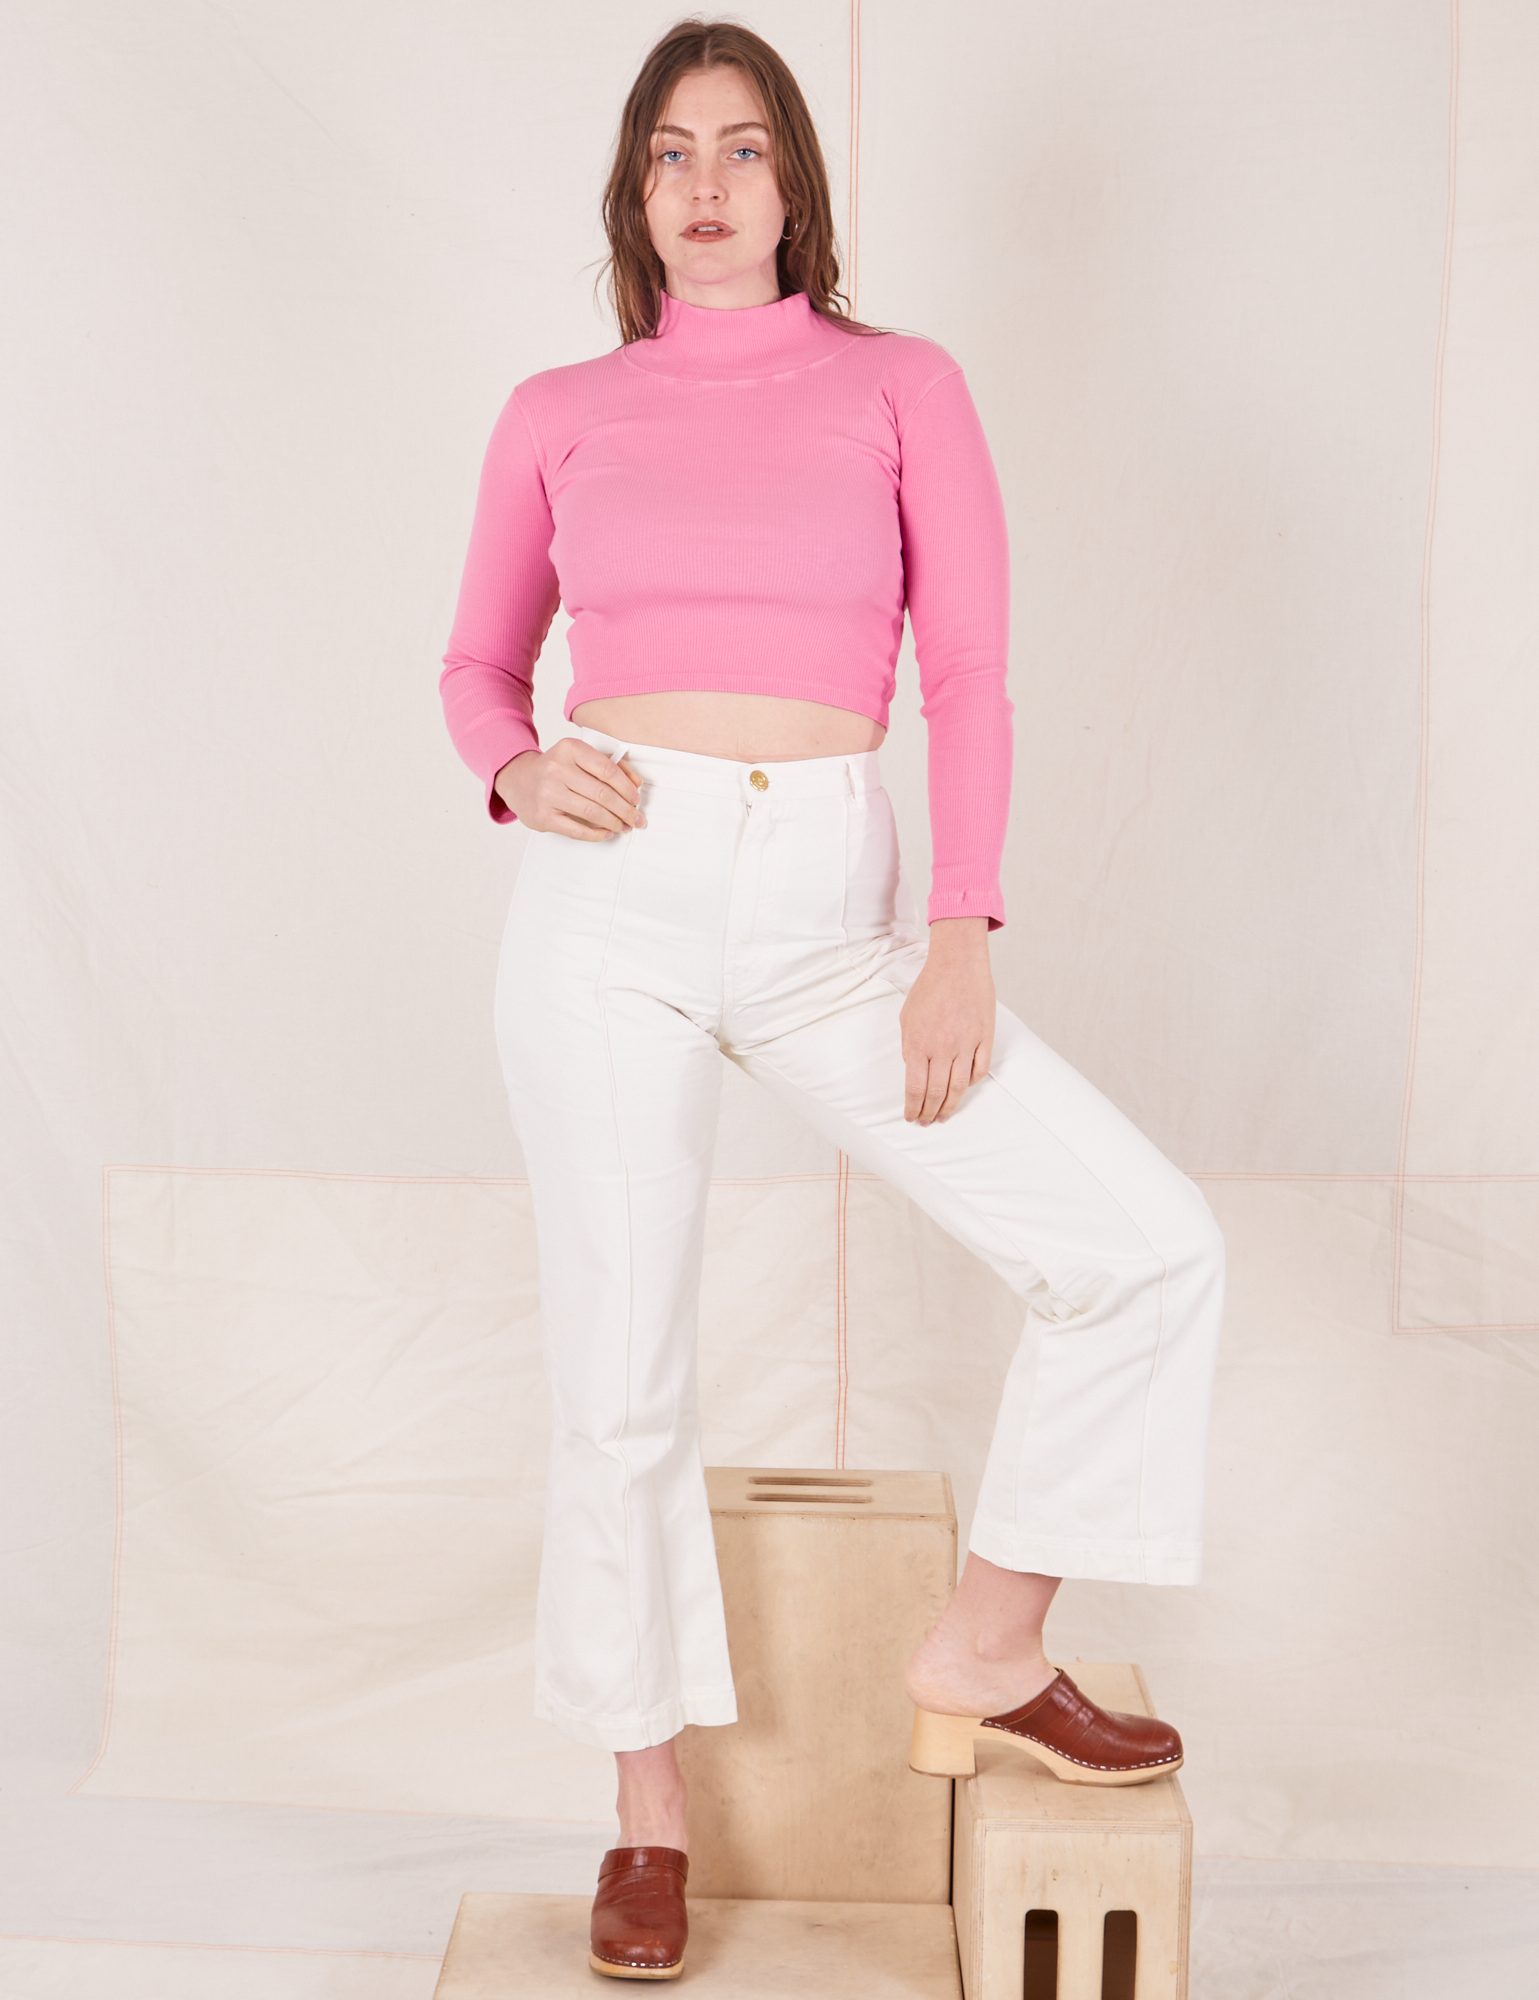 Allison is wearing Essential Turtleneck in Bubblegum Pink and vintage off-white Western Pants